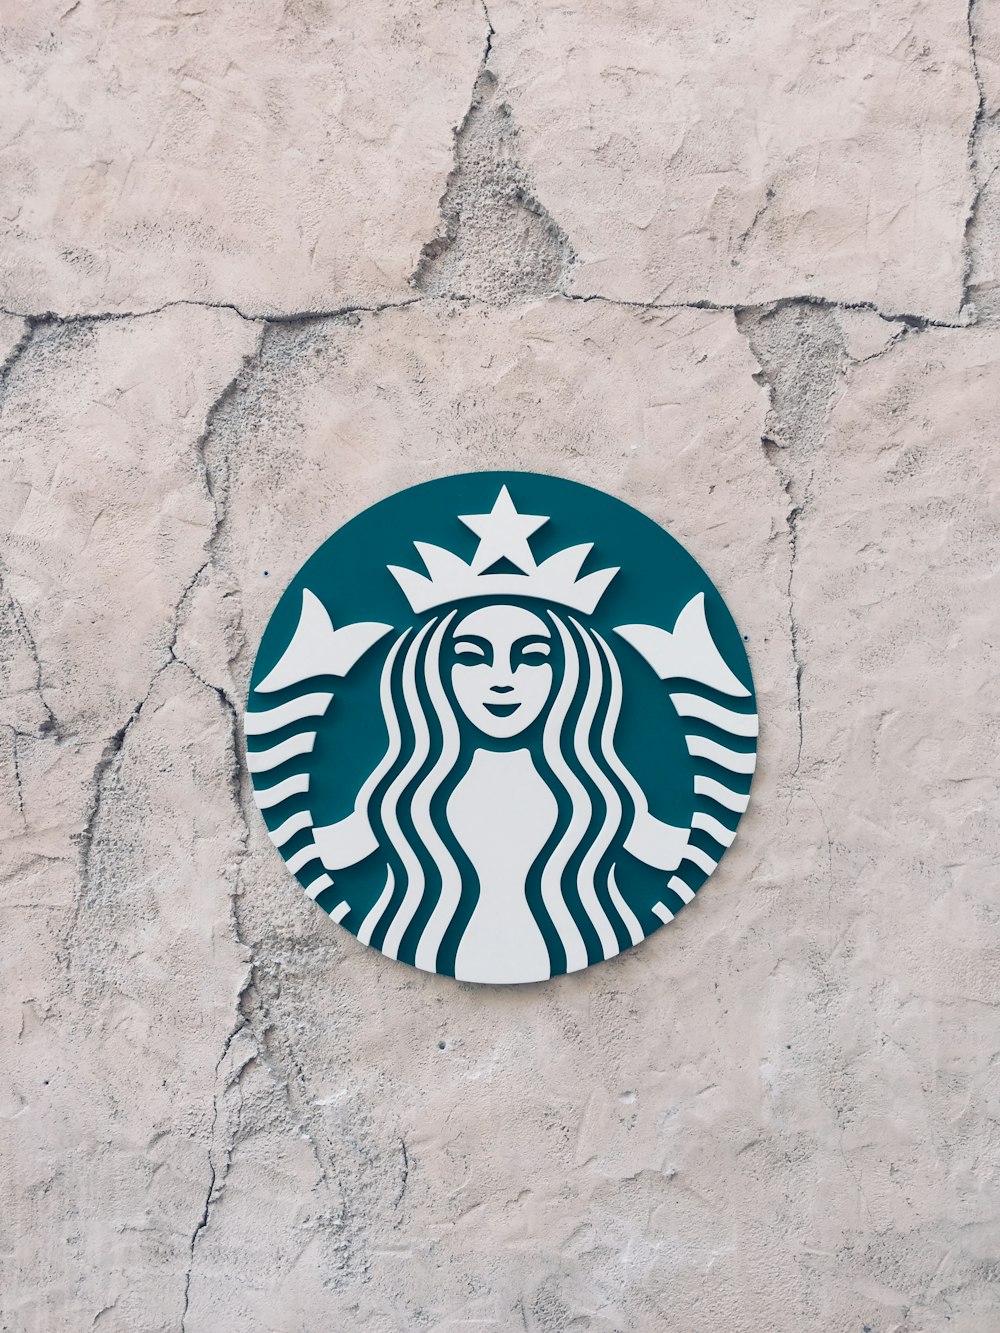 Starbucks Logo Pictures Download Free Images On Unsplash